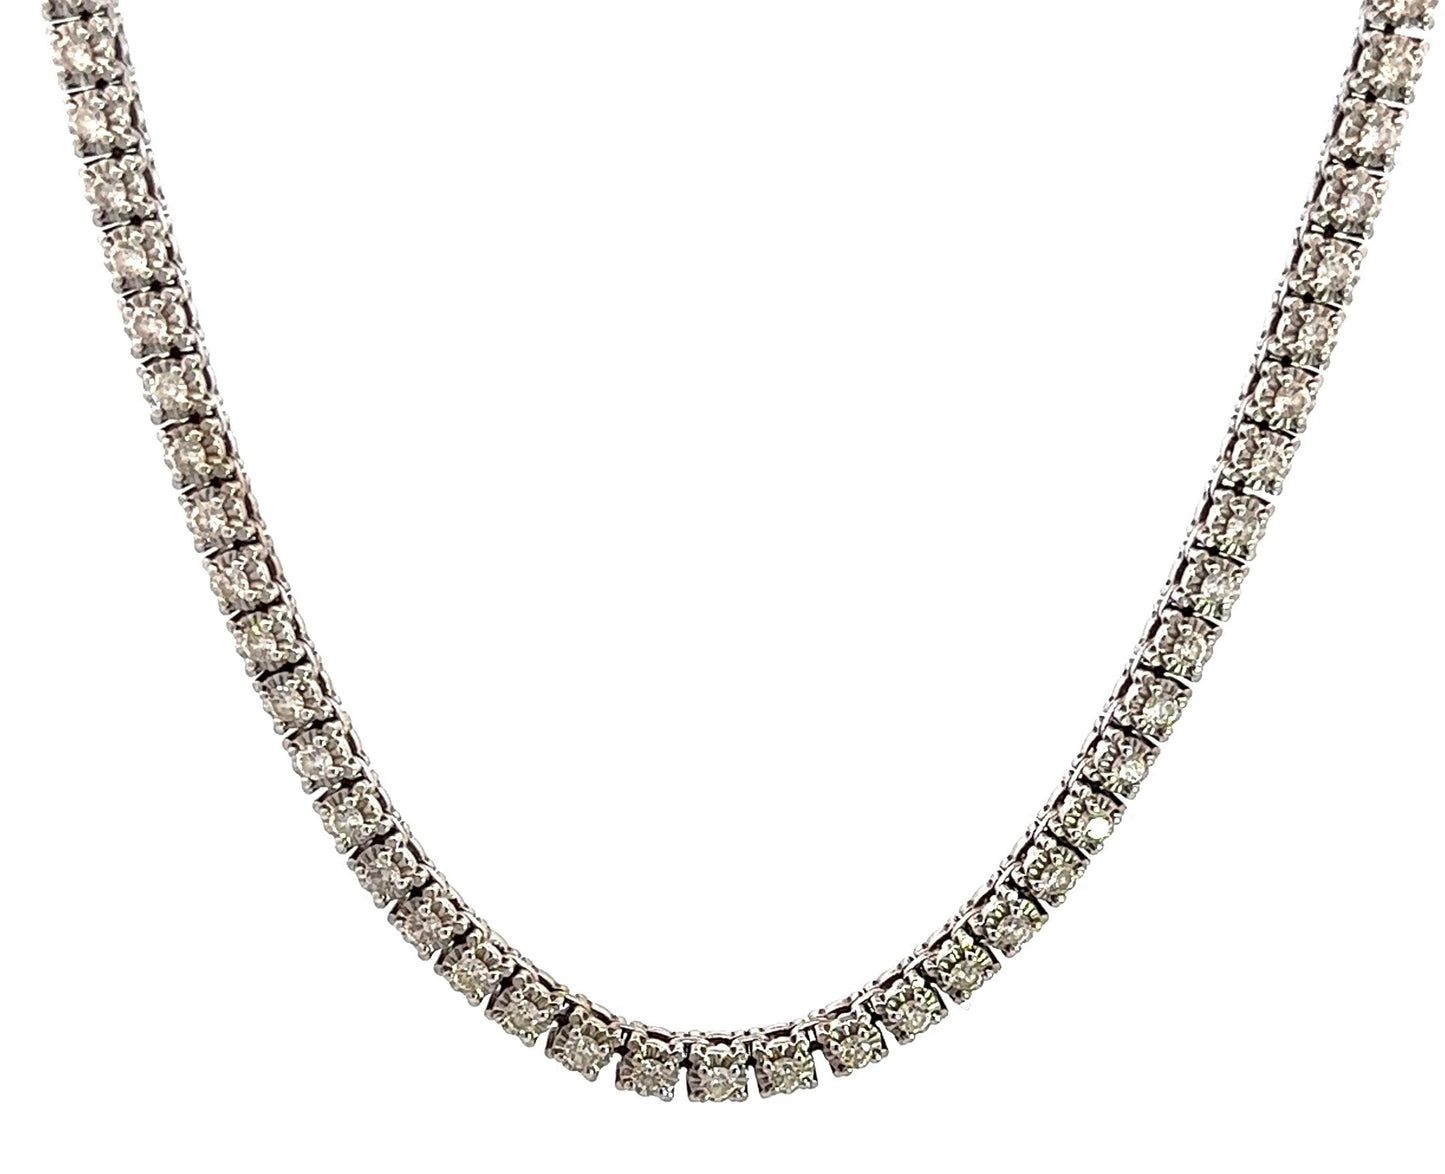 Hanging white gold diamond tennis necklace